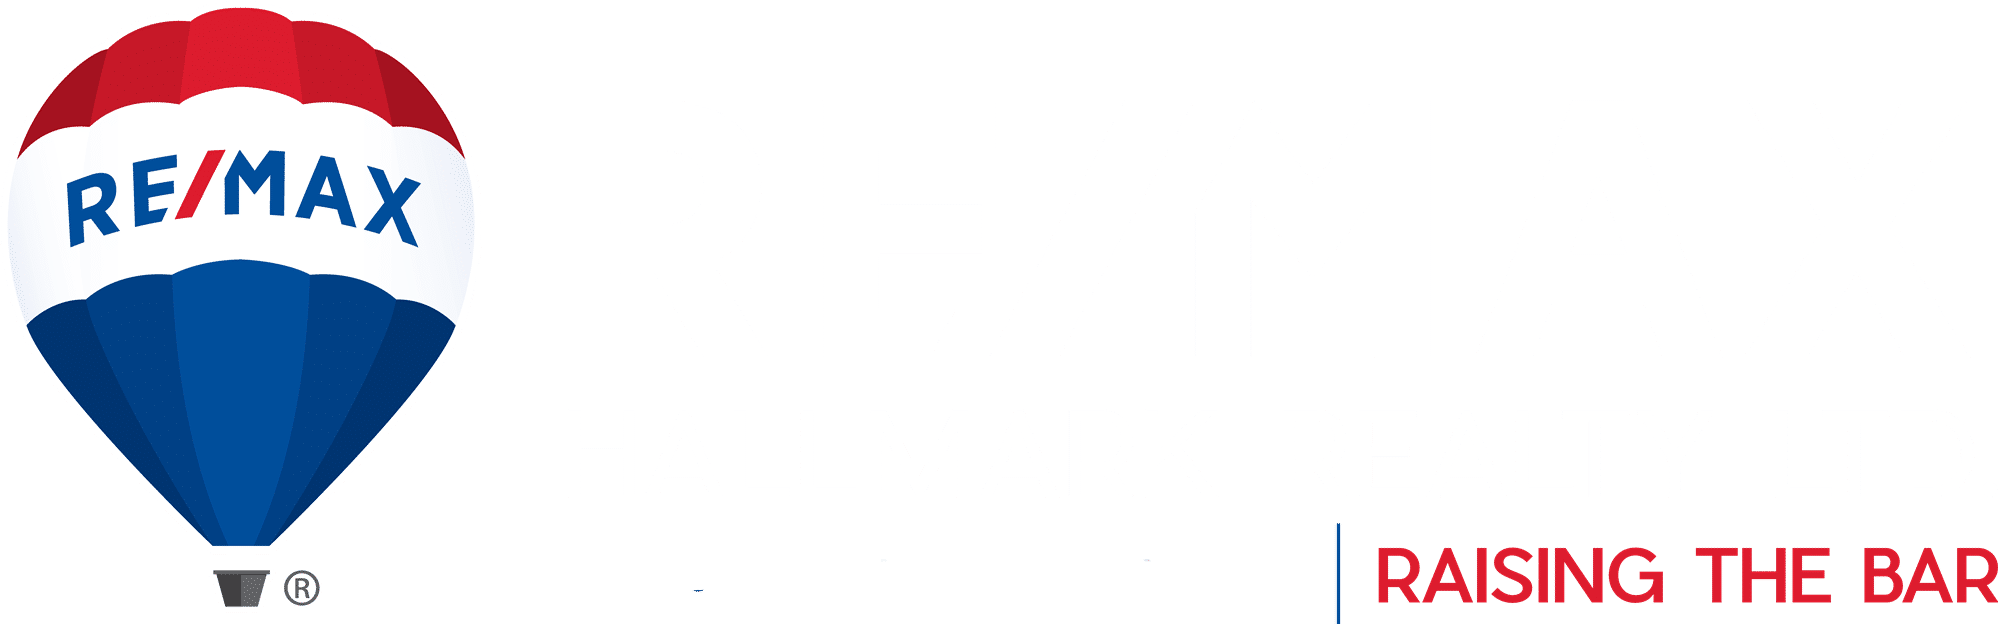 RE/MAX HALLMARK REALTY LTD., BROKERAGE